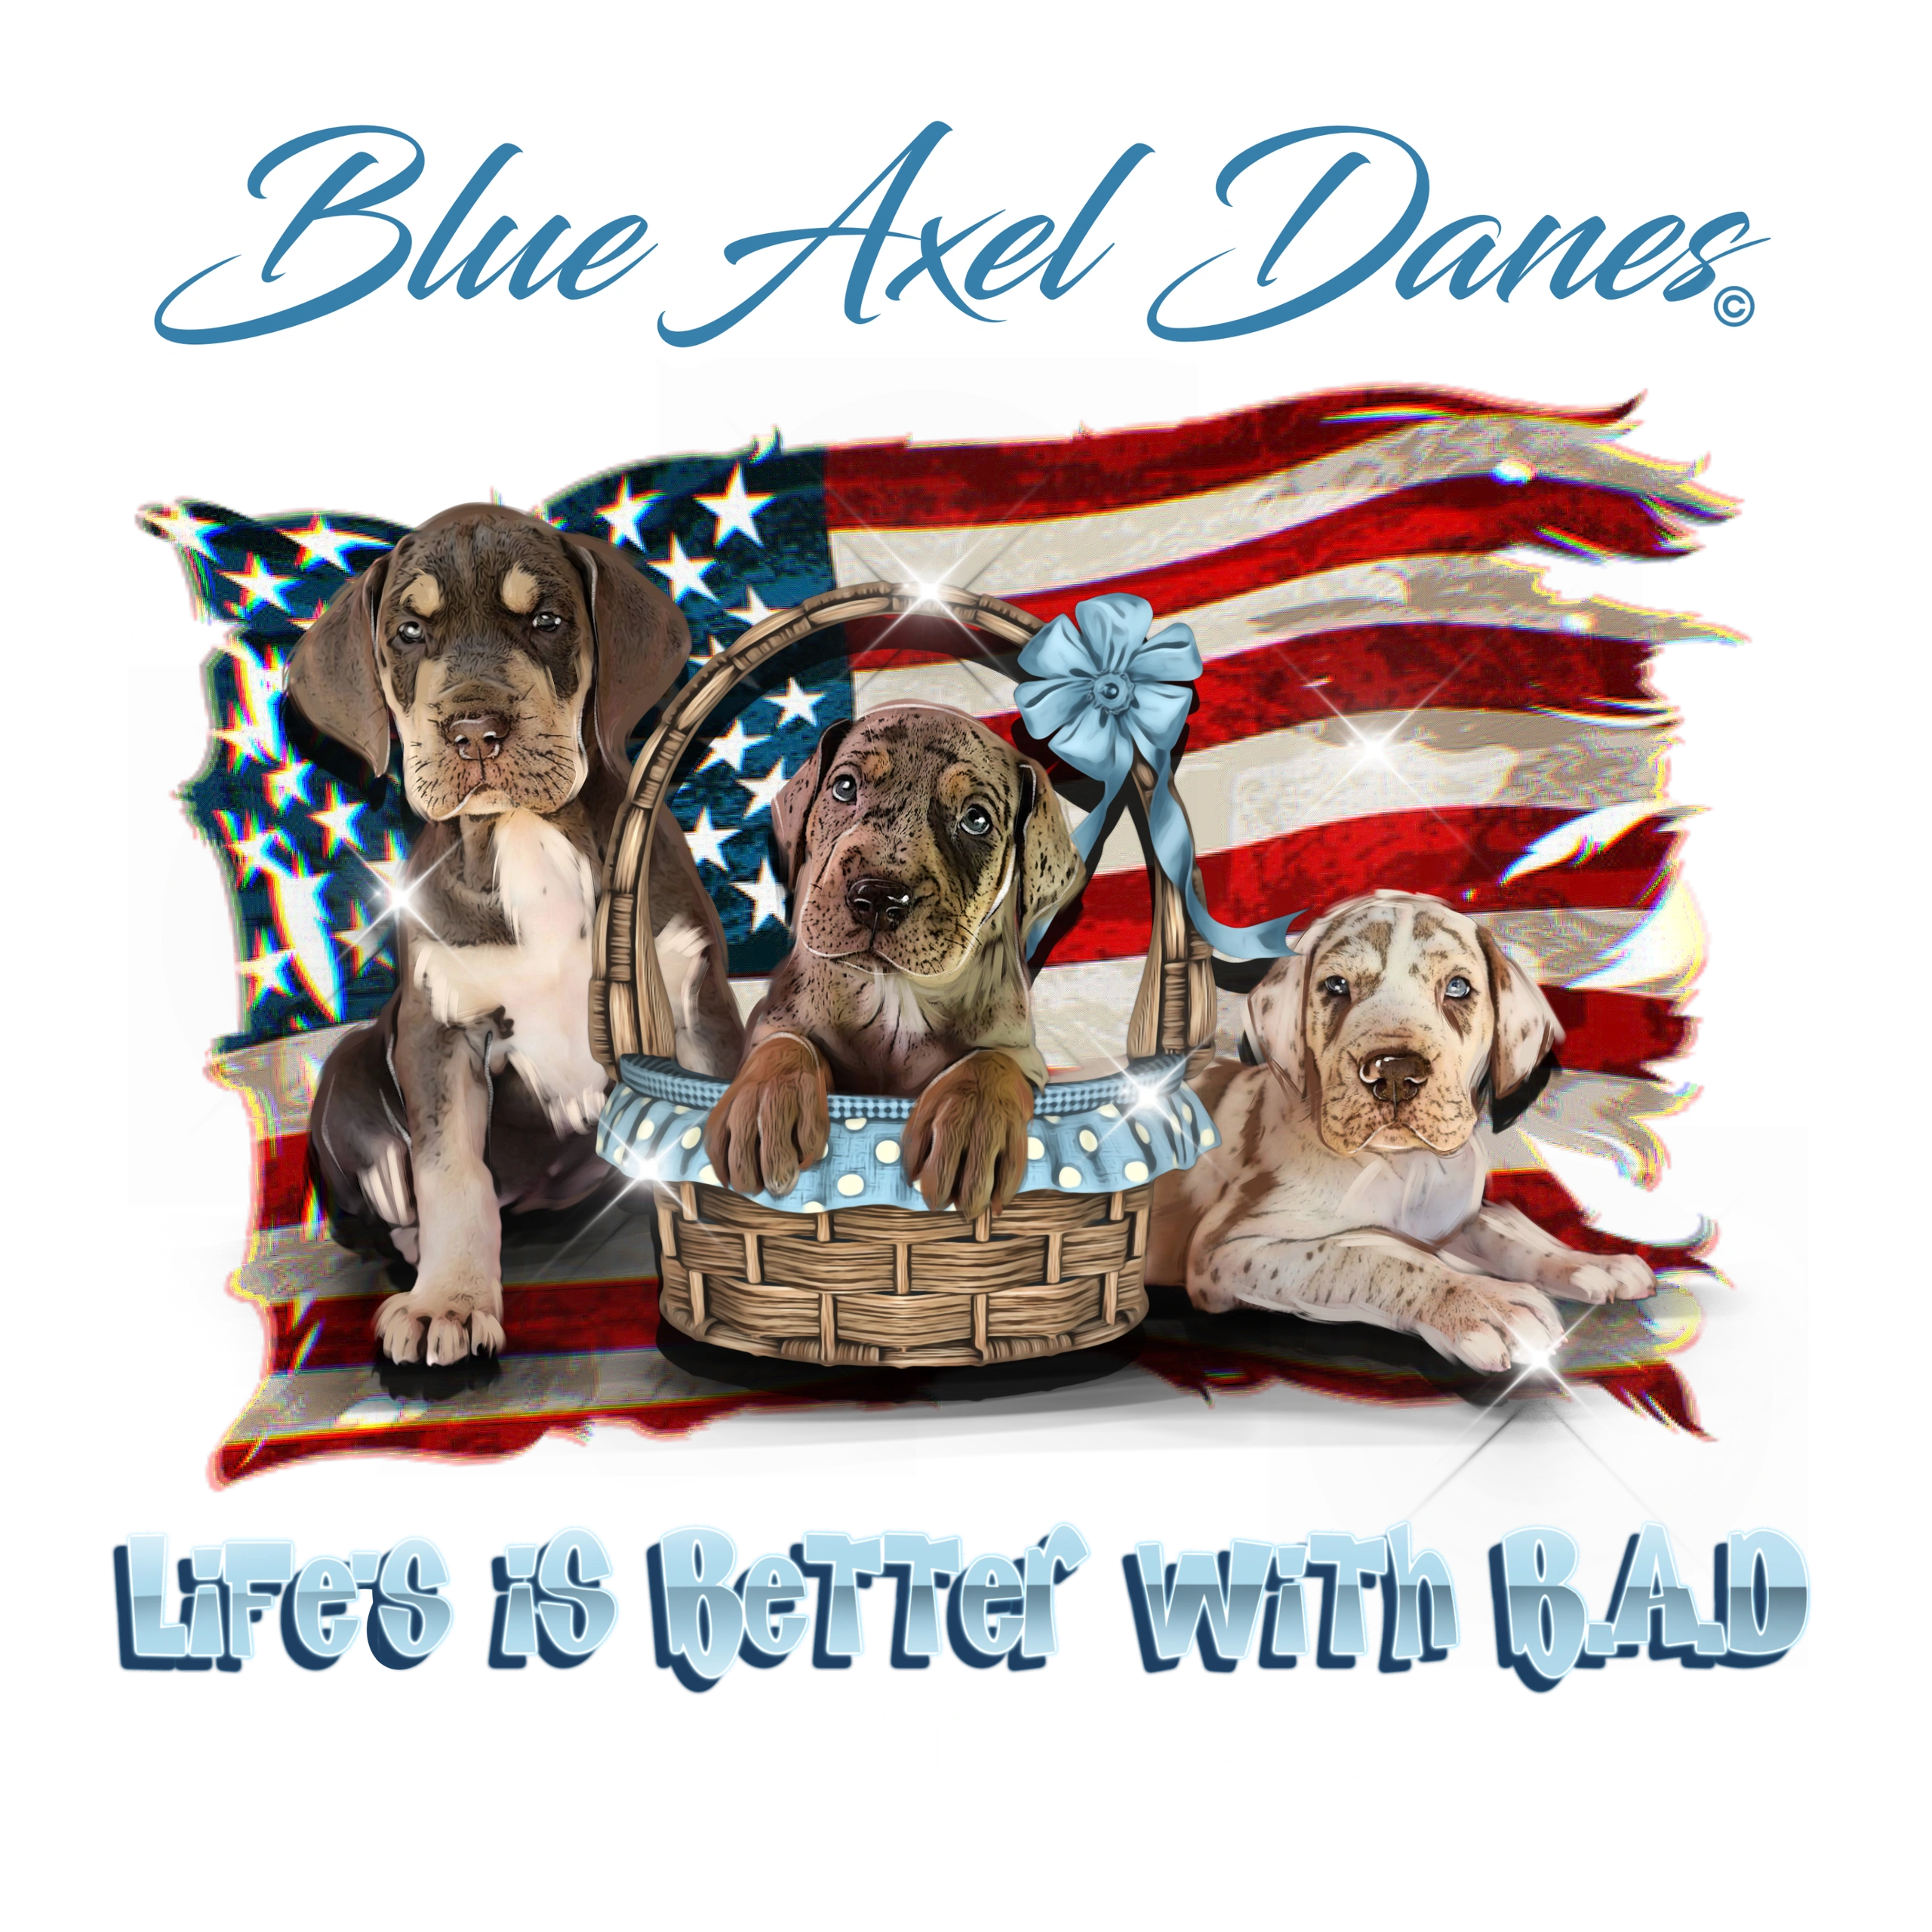 American Flag puppies
Great Danes
Kentucky puppies
Blue great danes
Merle puppies
Great dane merle